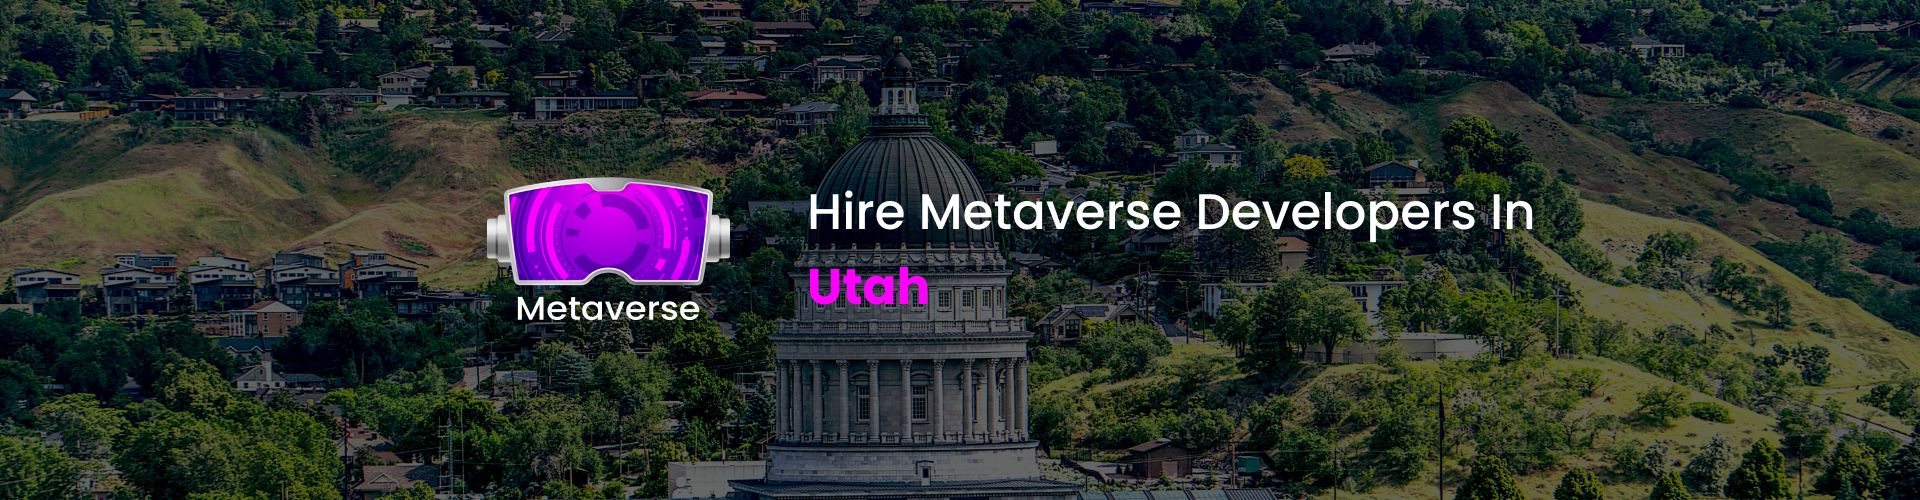 hire metaverse developers in utah